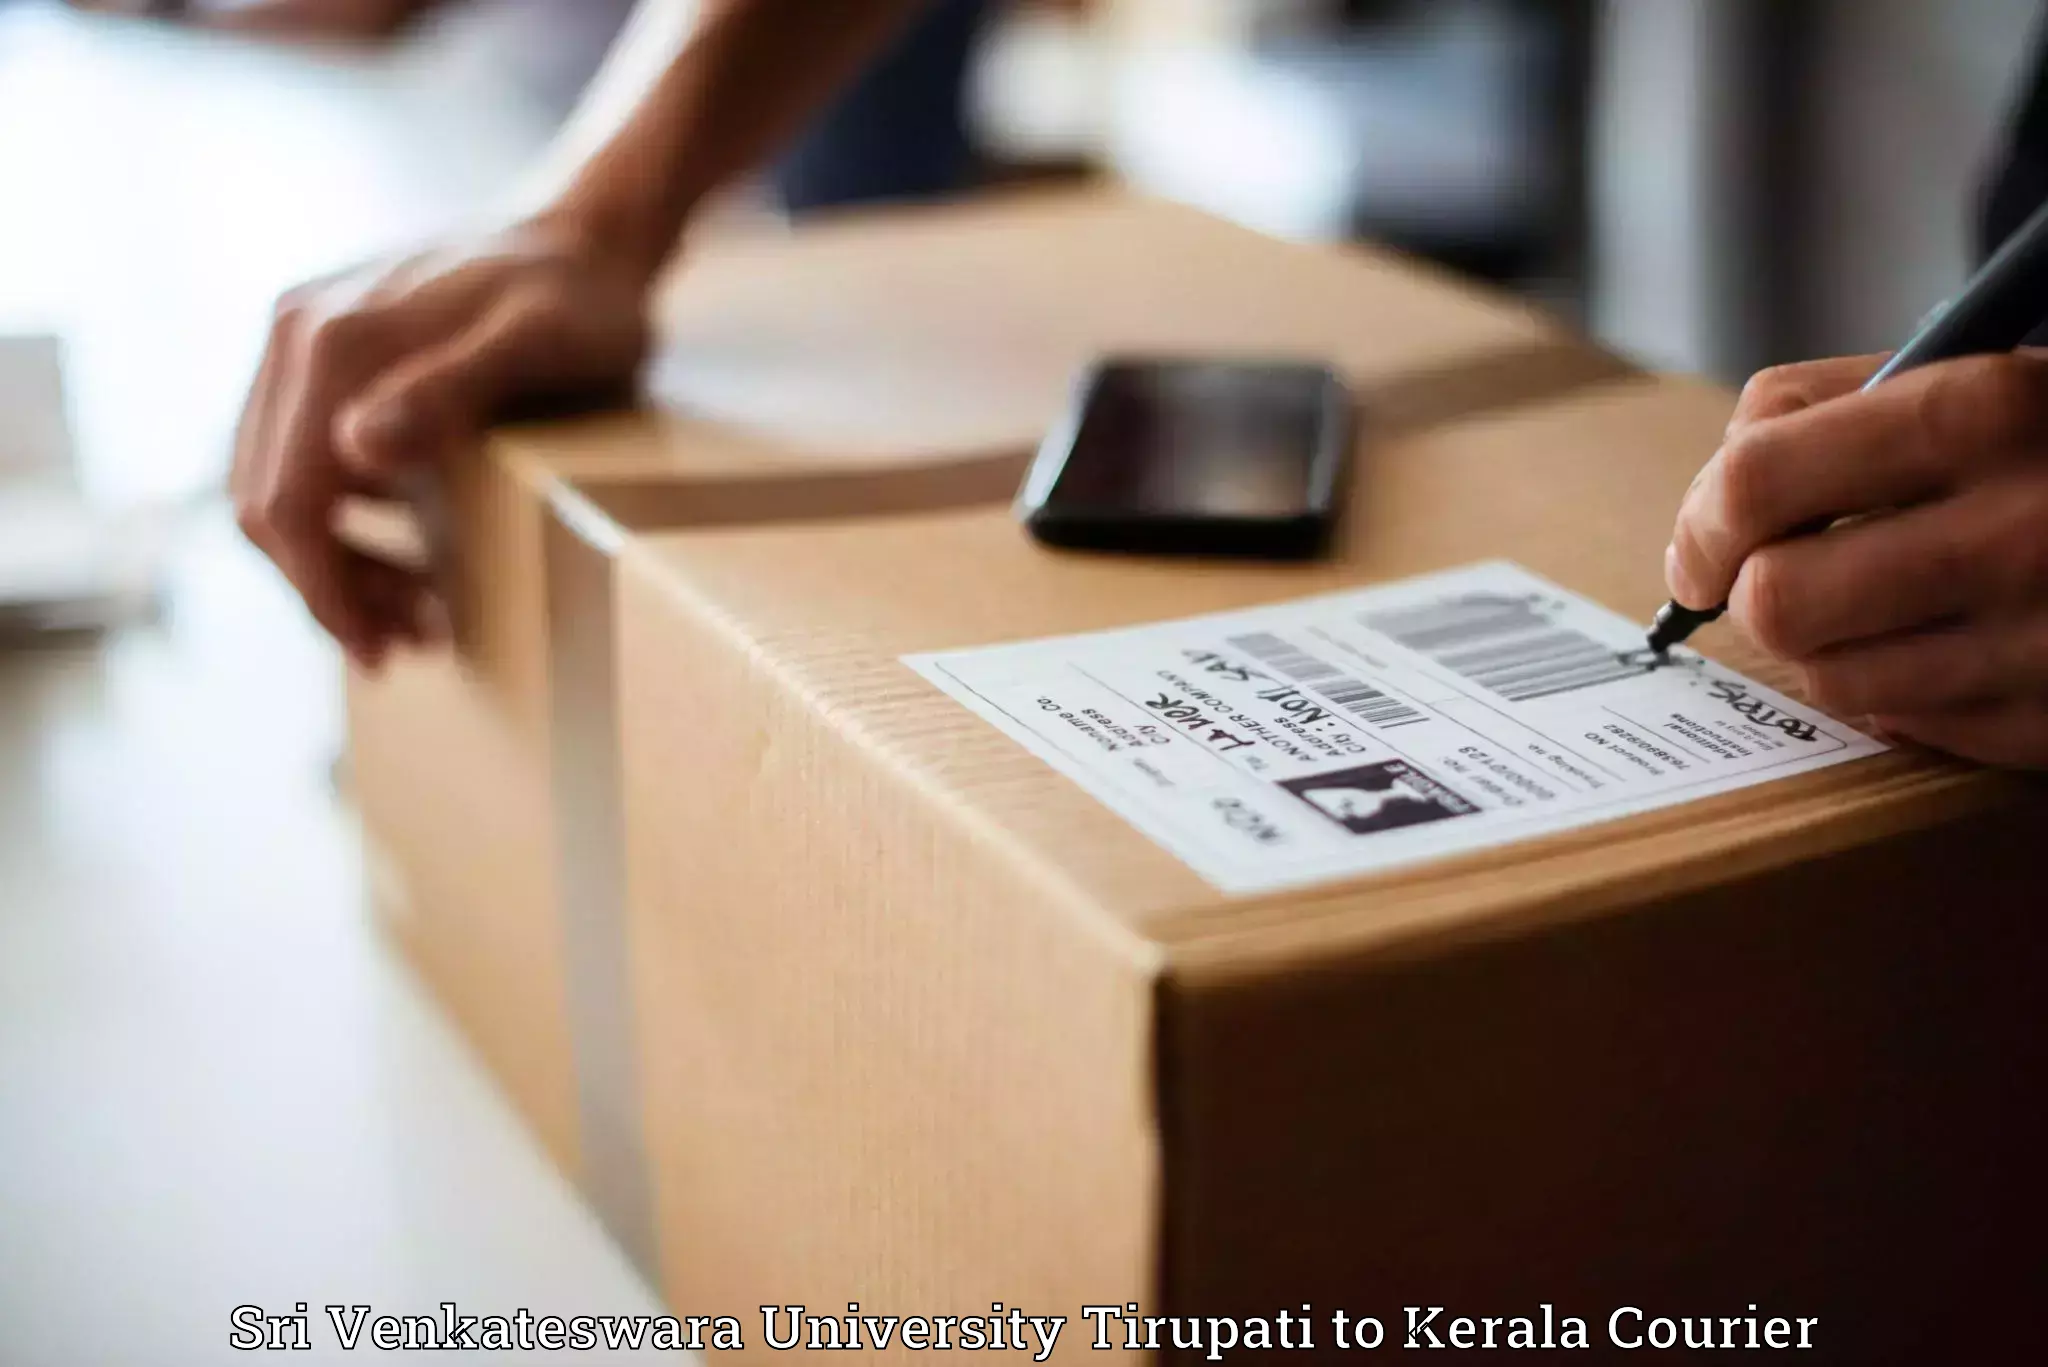 Rapid freight solutions Sri Venkateswara University Tirupati to Kerala